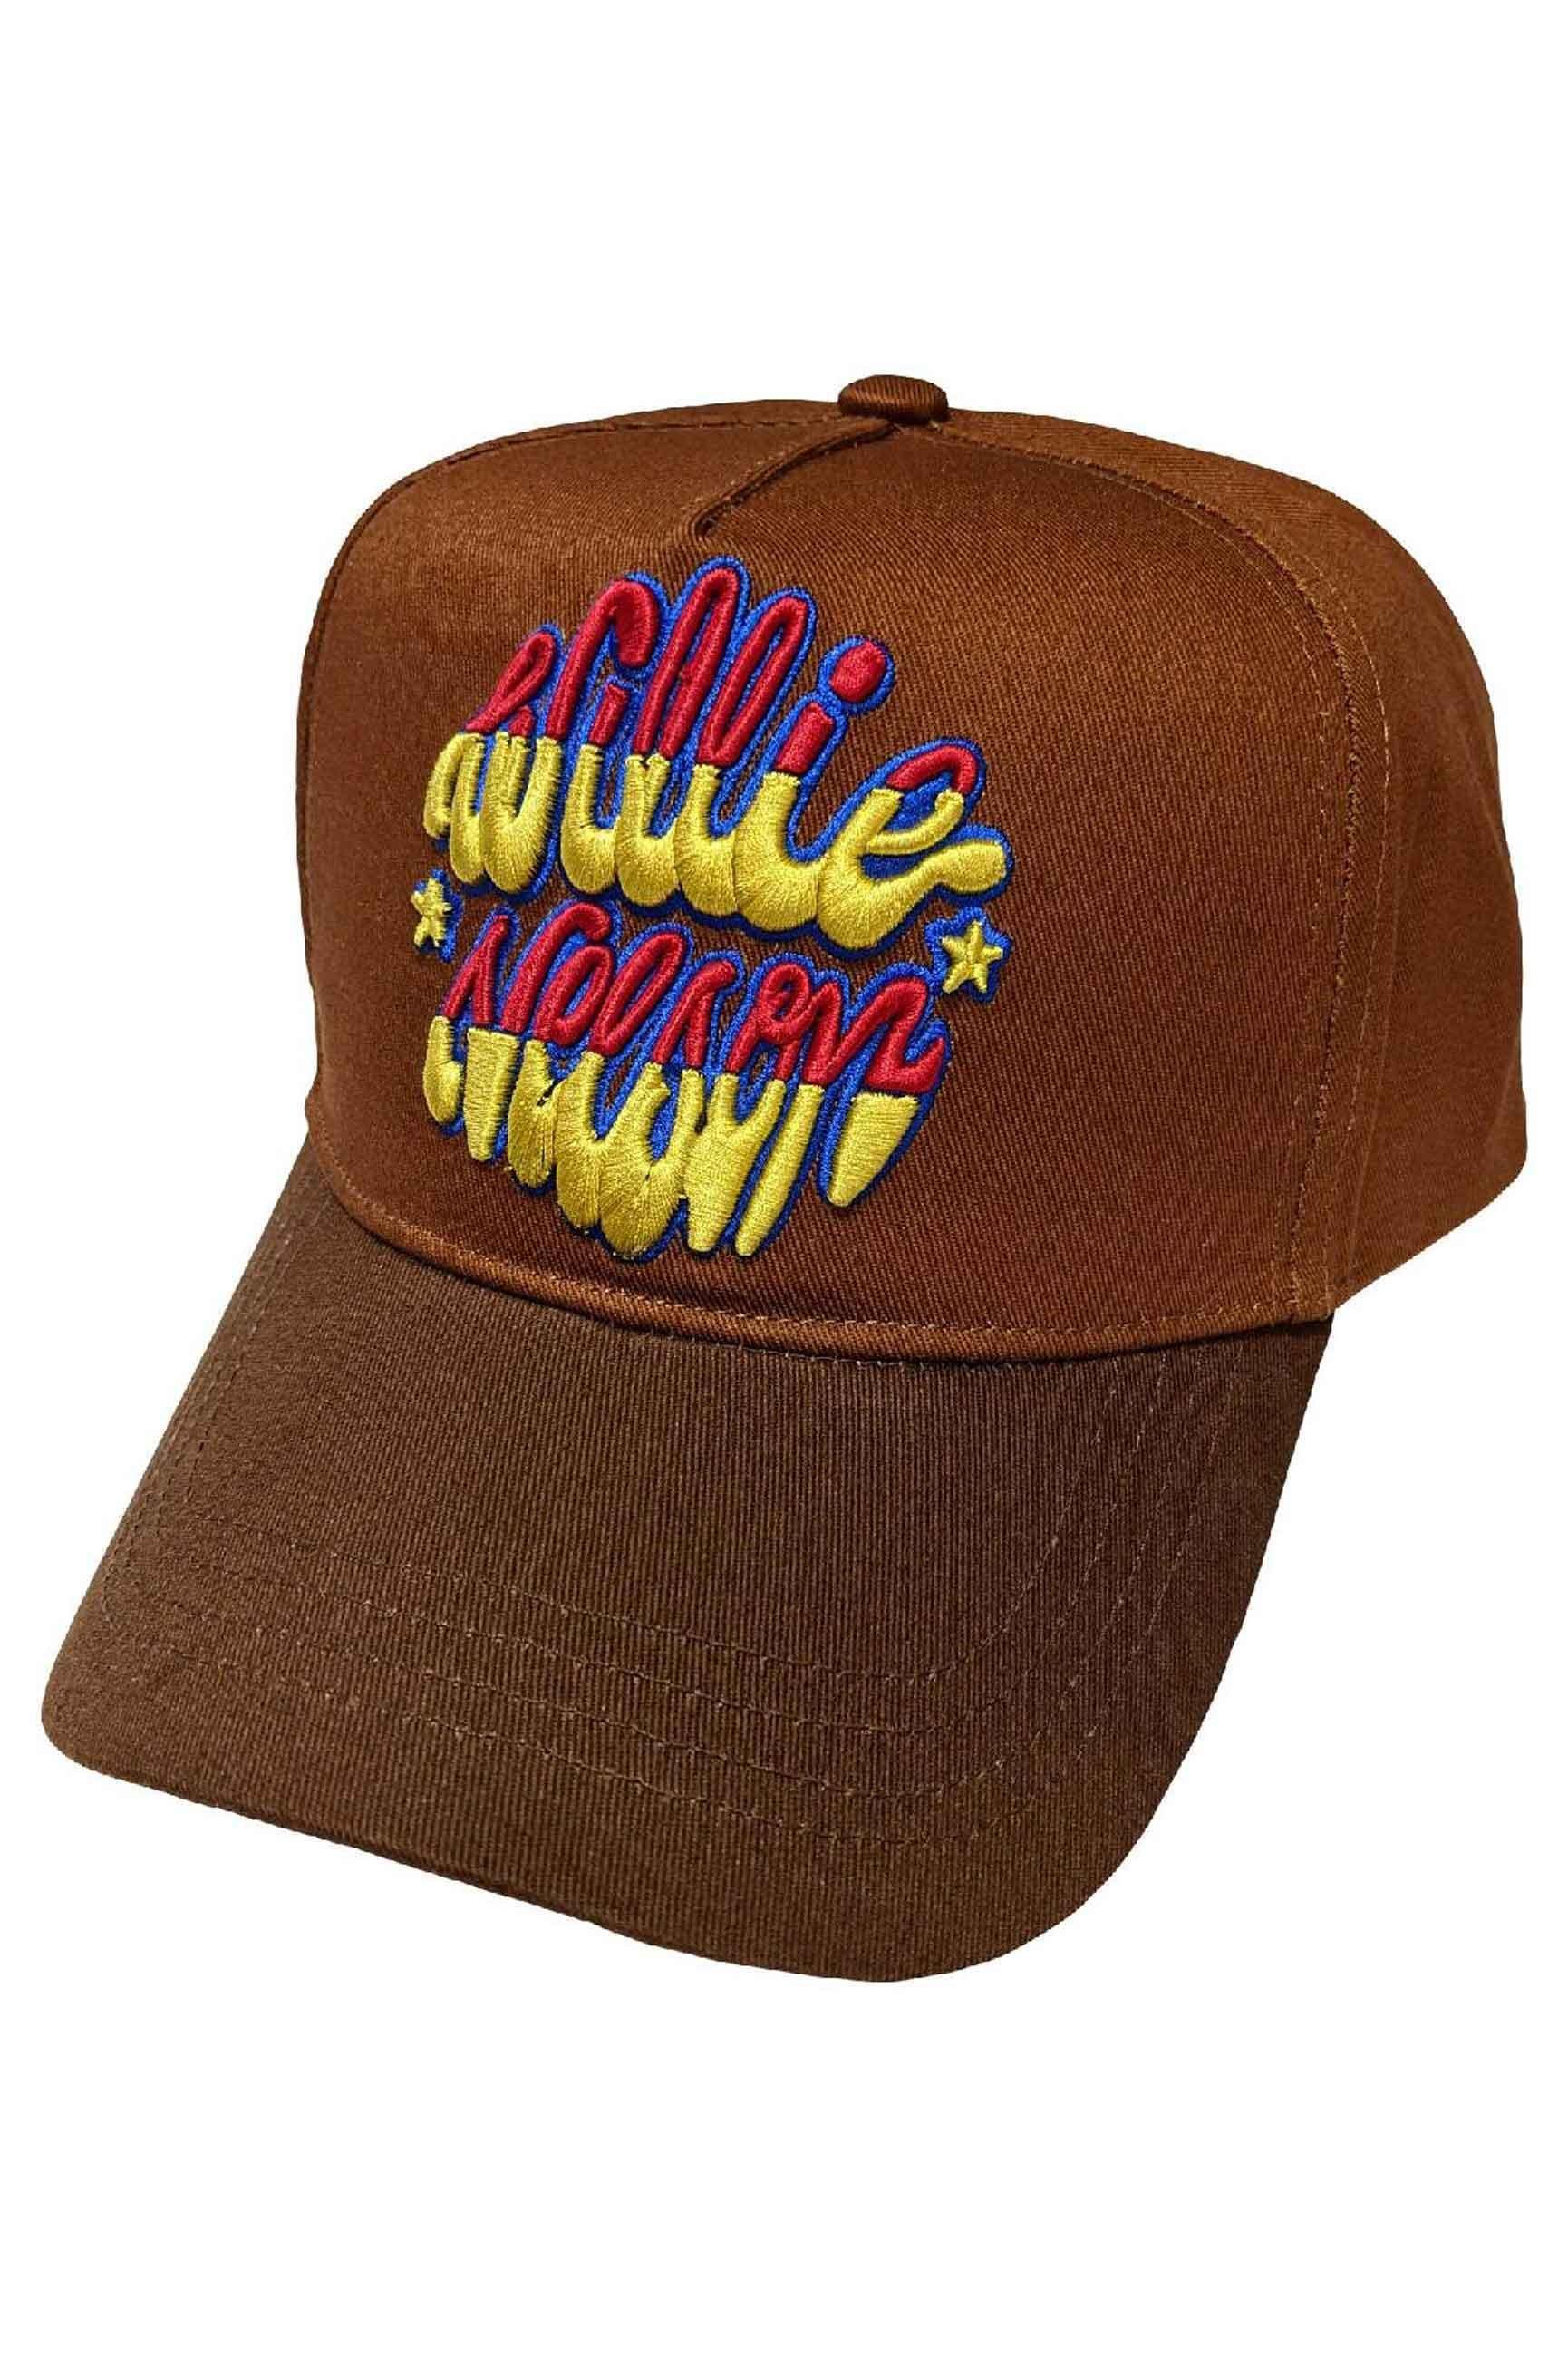 Бейсбольная кепка с логотипом и эмблемой Willie Nelson, коричневый willie nelson phases and stages 180g